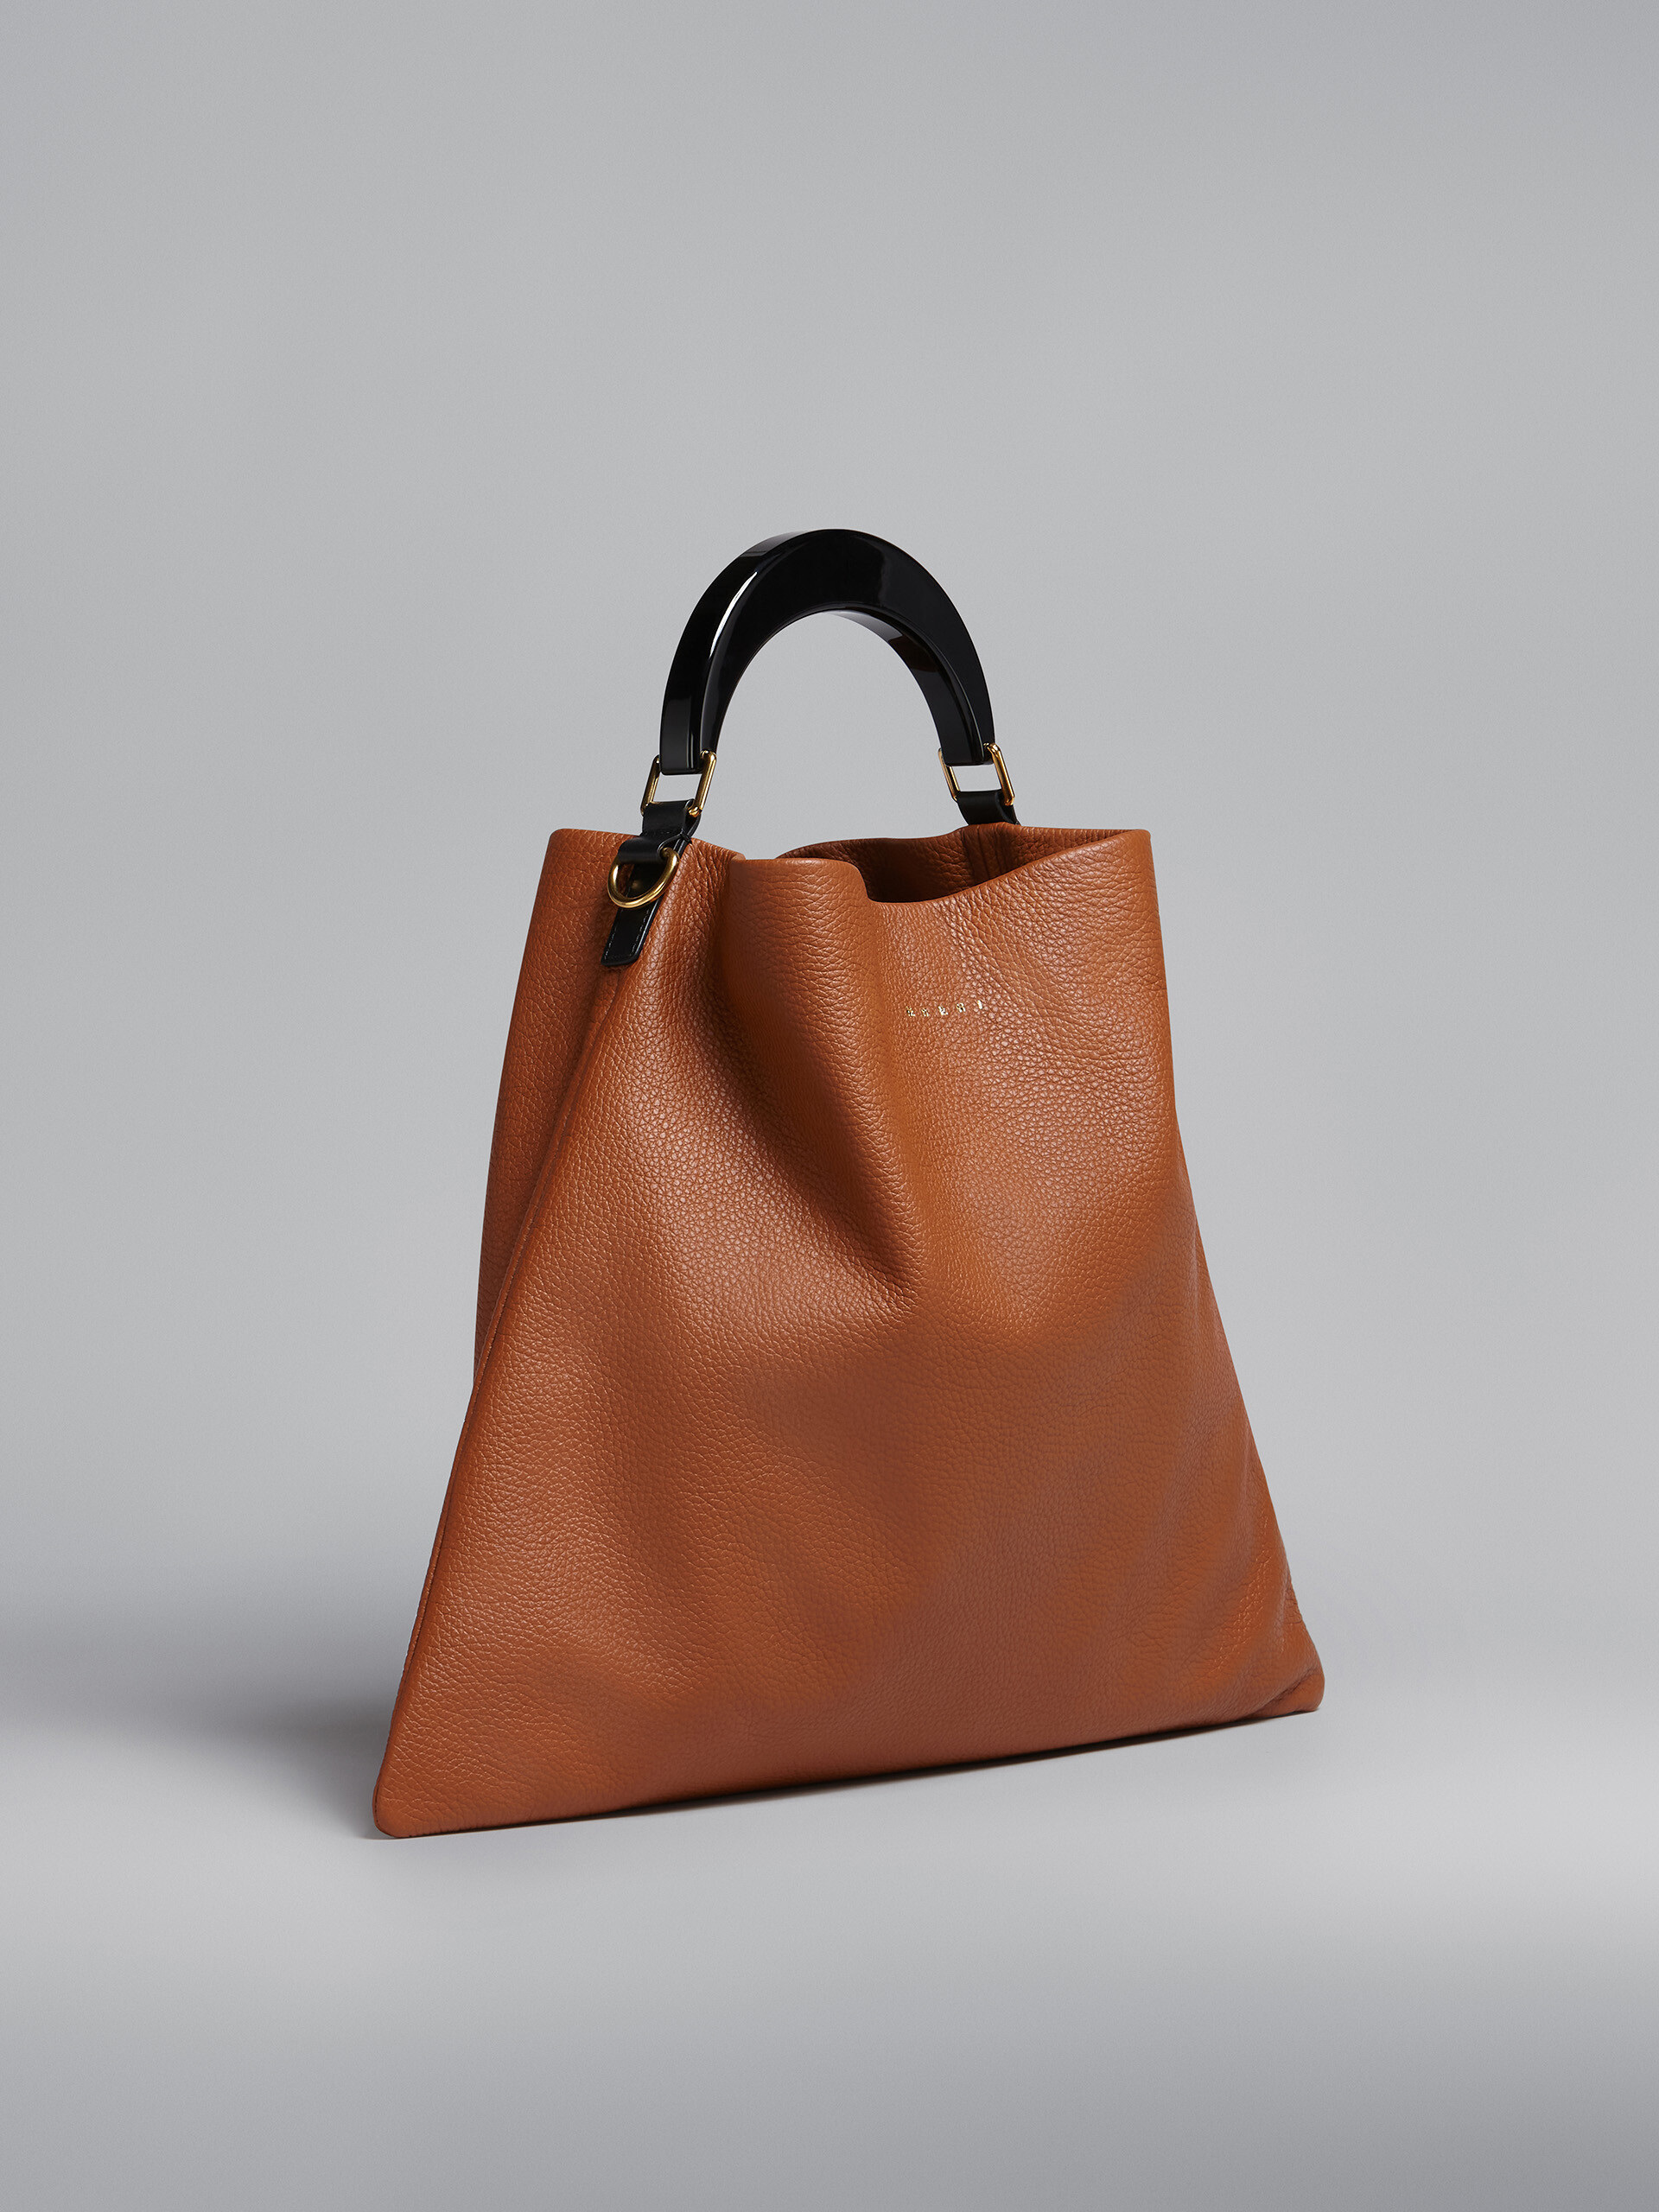 Venice medium bag in brown leather - Shoulder Bags - Image 6